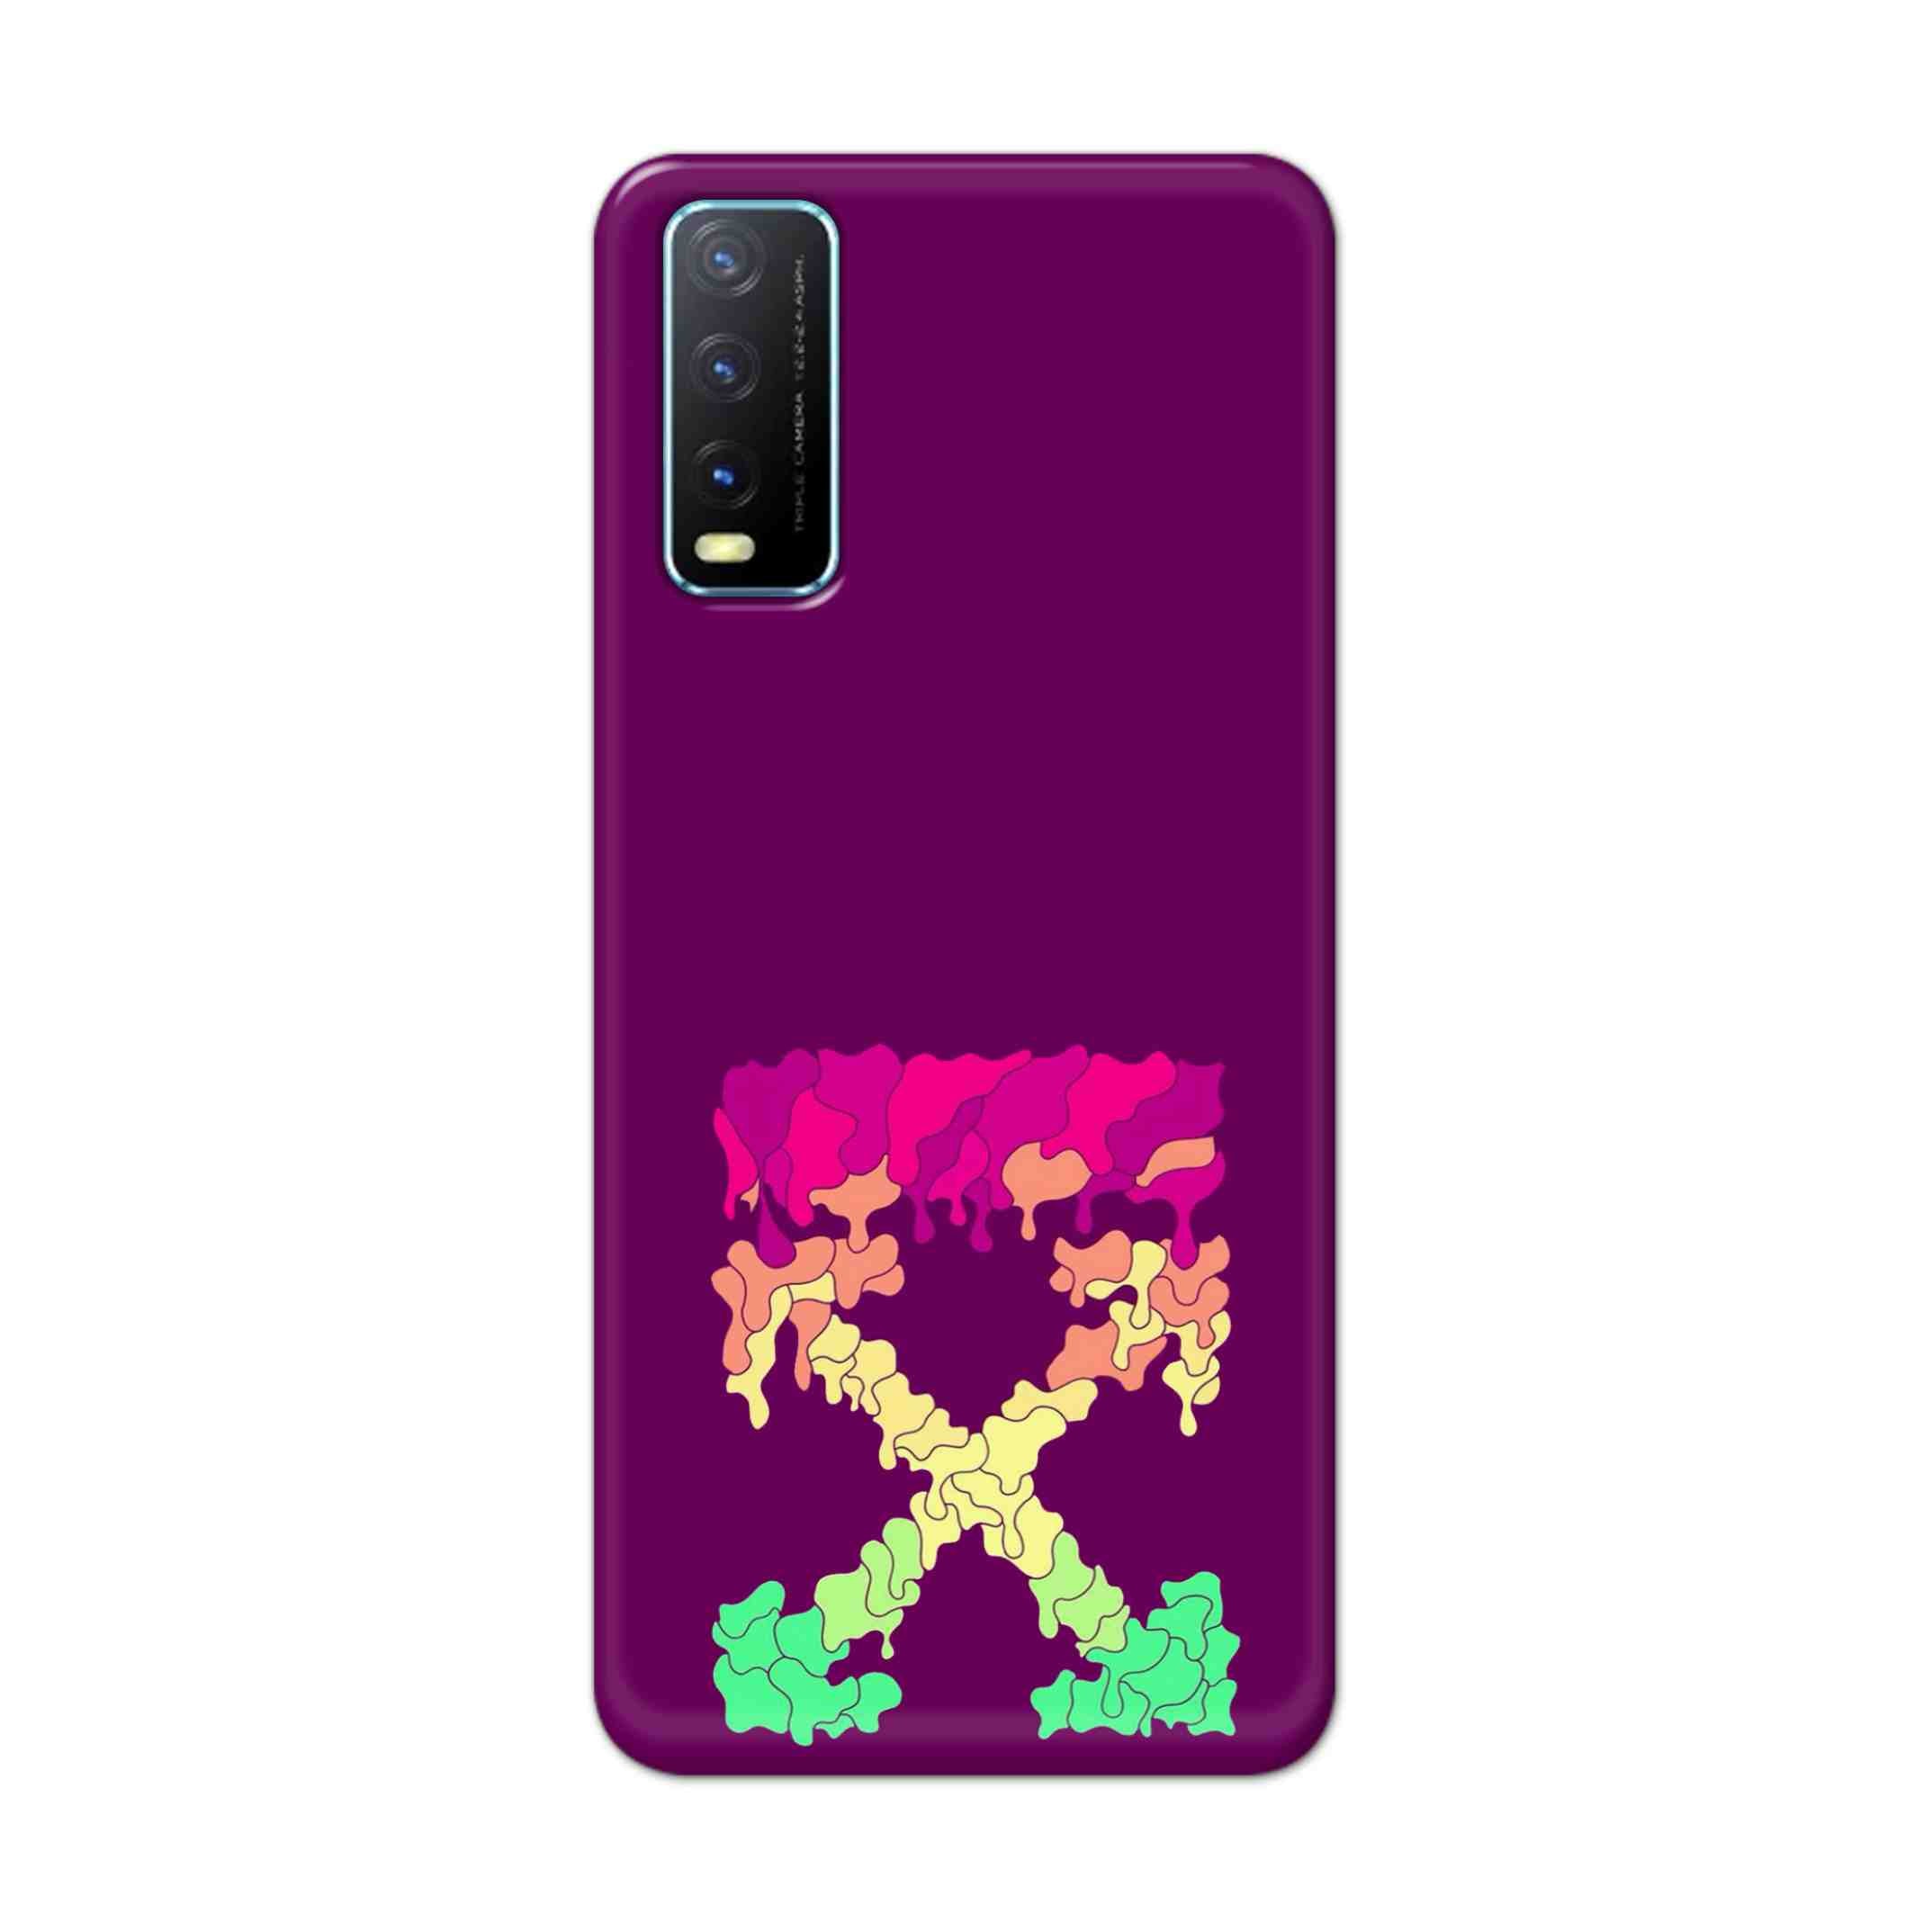 Buy X.O Hard Back Mobile Phone Case Cover For Vivo Y20 Online